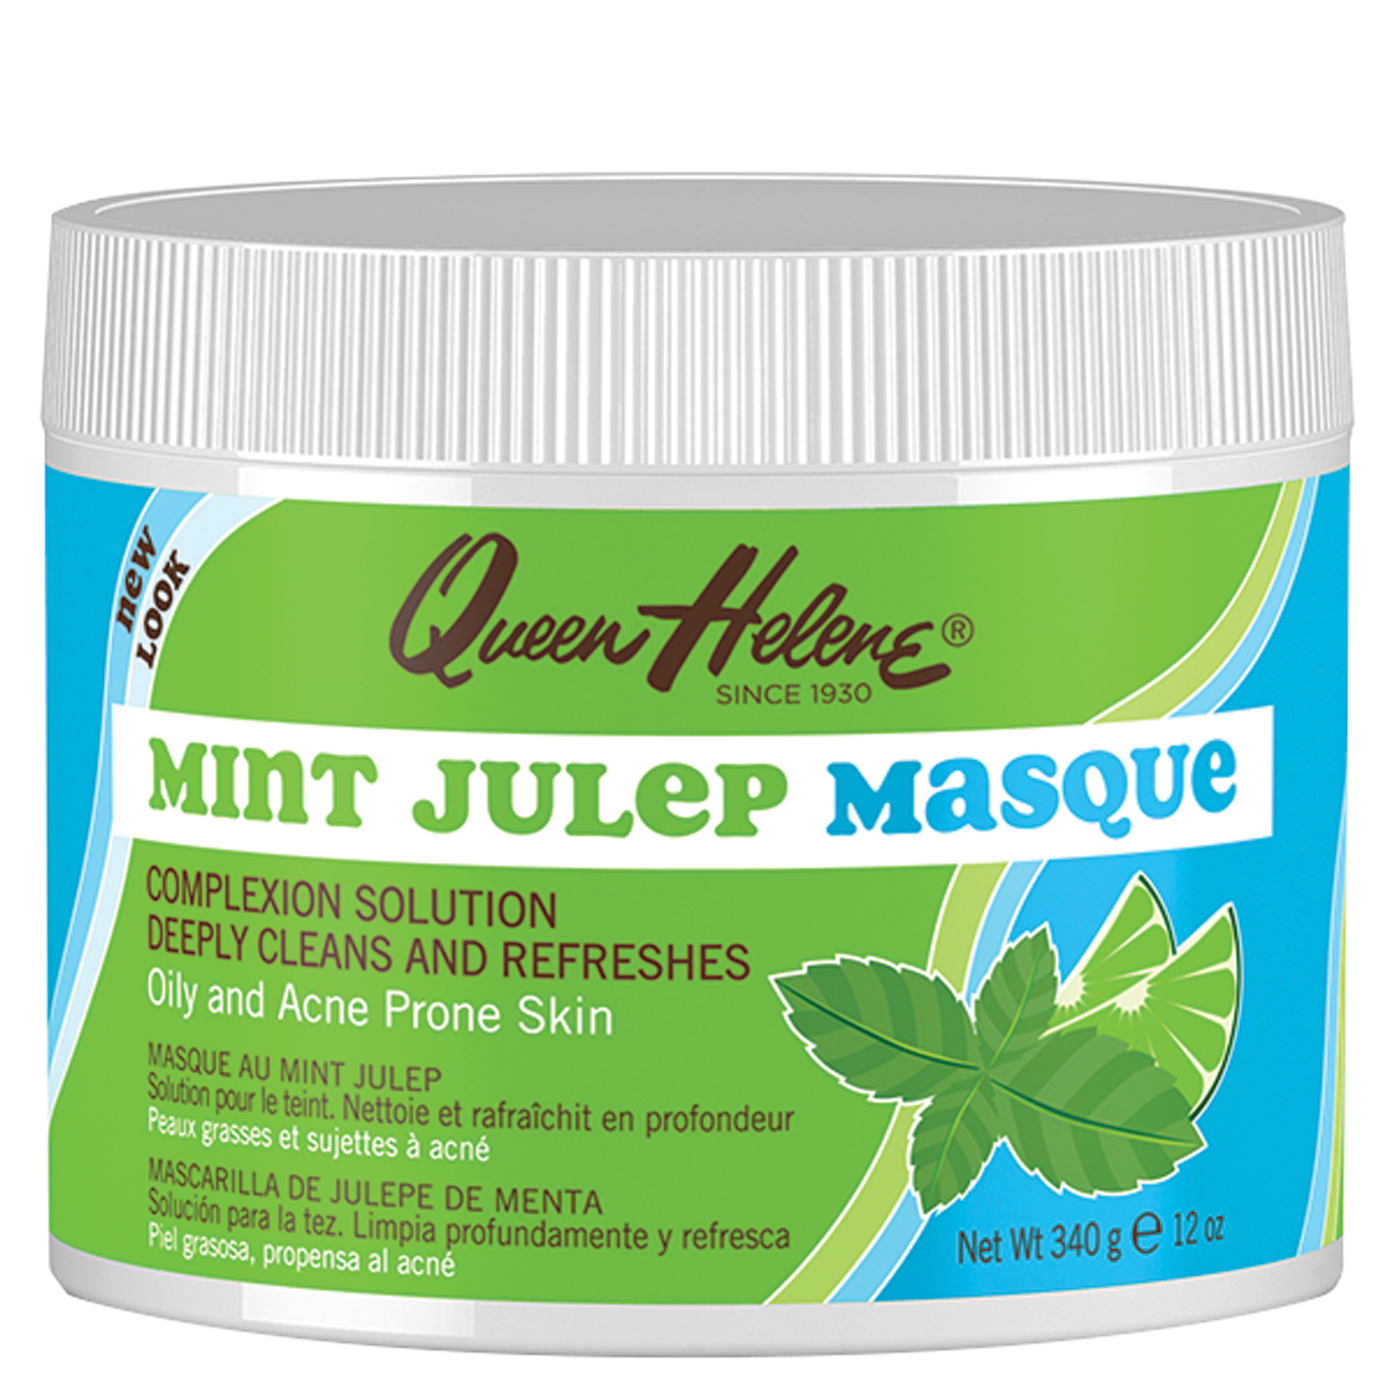 Mint Julep® Masque - 12 oz.